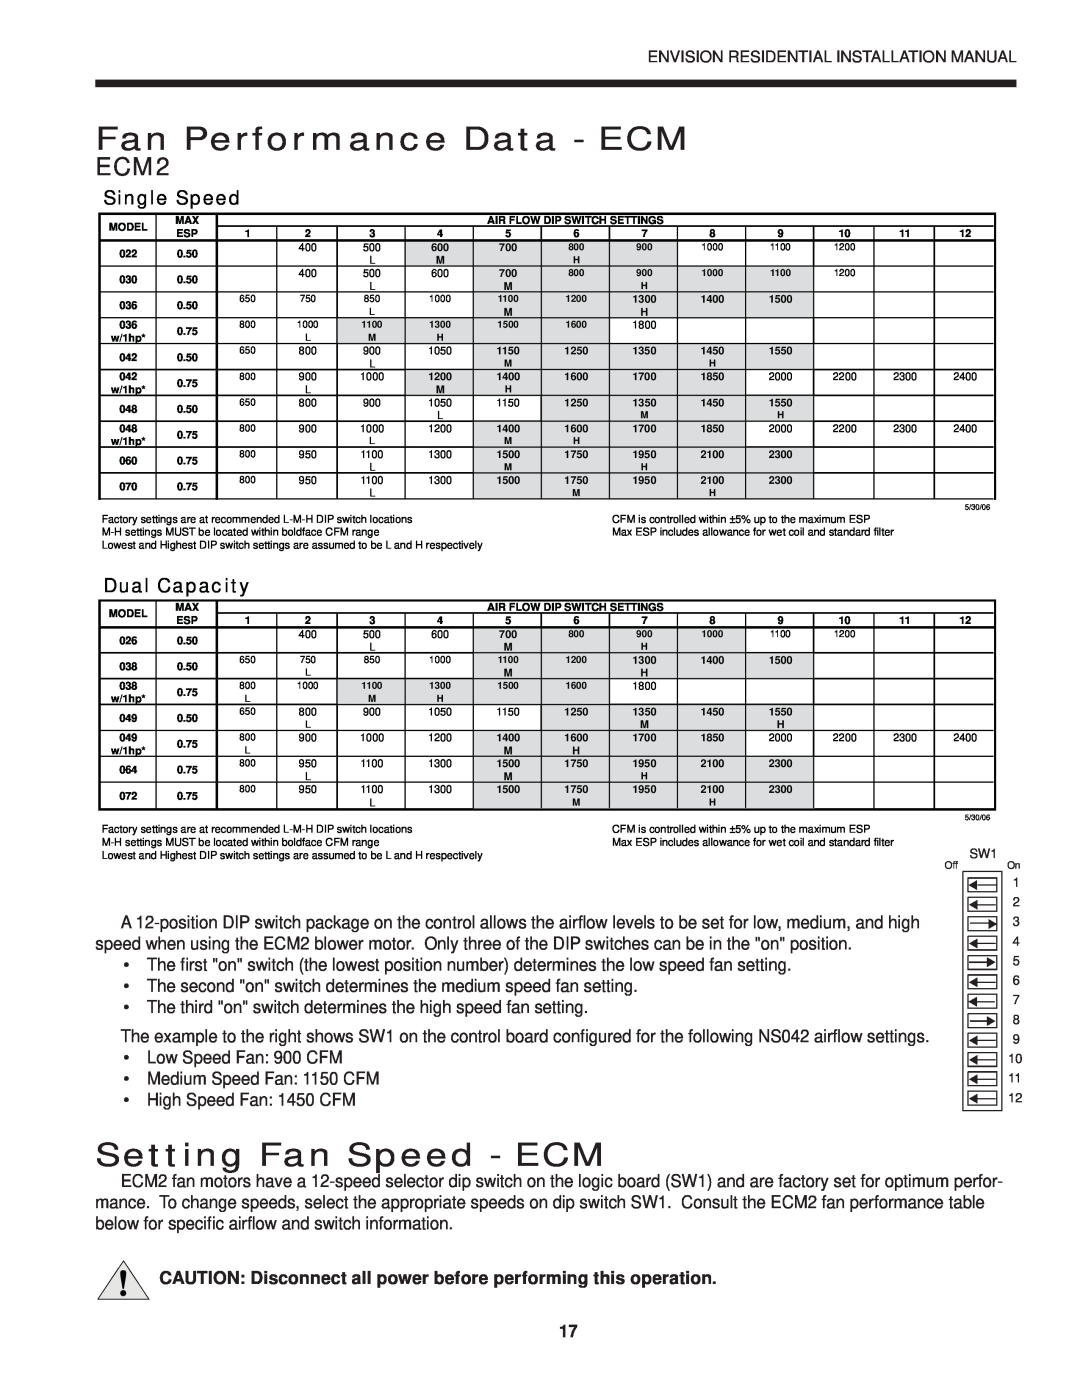 Envision Peripherals R-410A Fan Performance Data - ECM, Setting Fan Speed - ECM, ECM2, Single Speed, Dual Capacity 